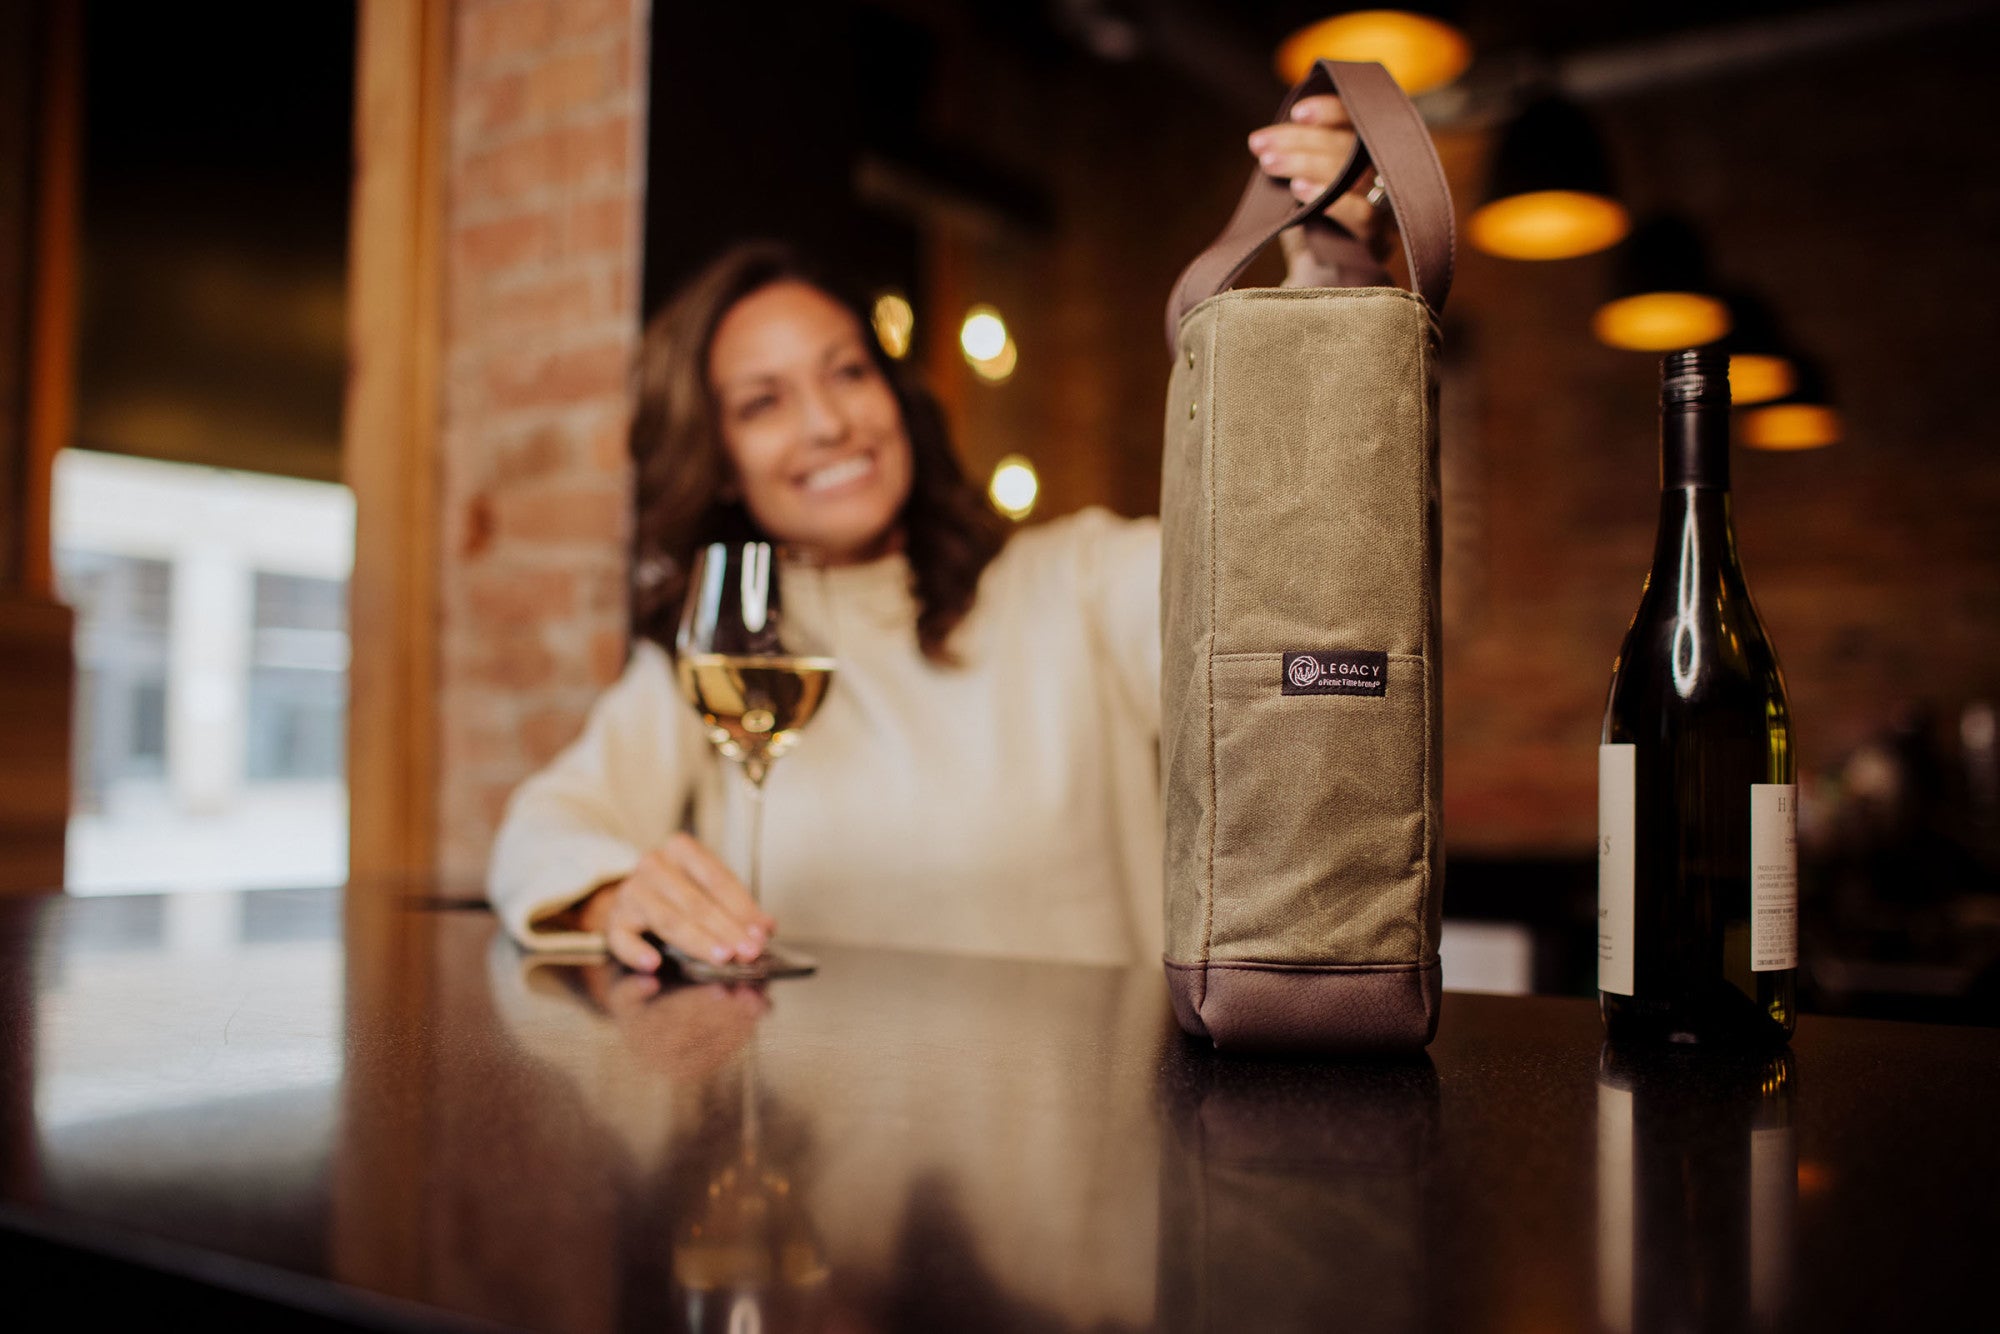 Houston Astros - 2 Bottle Insulated Wine Cooler Bag